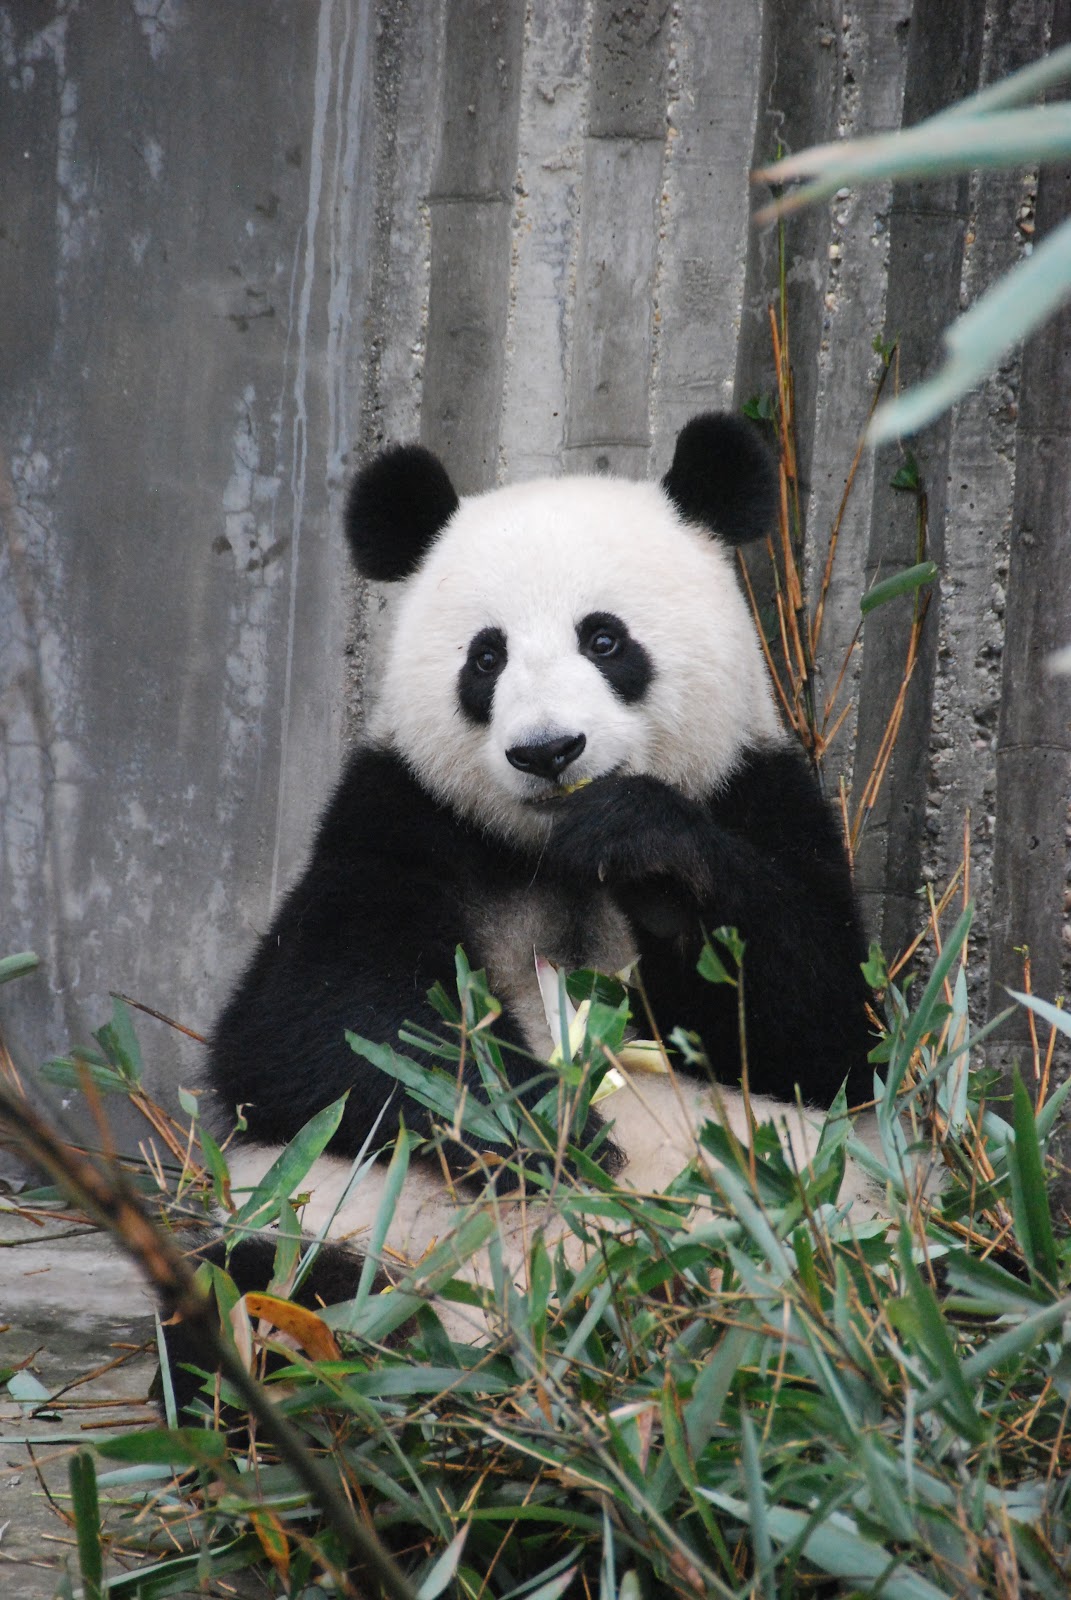 https://upload.wikimedia.org/wikipedia/commons/3/3e/Panda-bear-on-green-grass-3608263.jpg